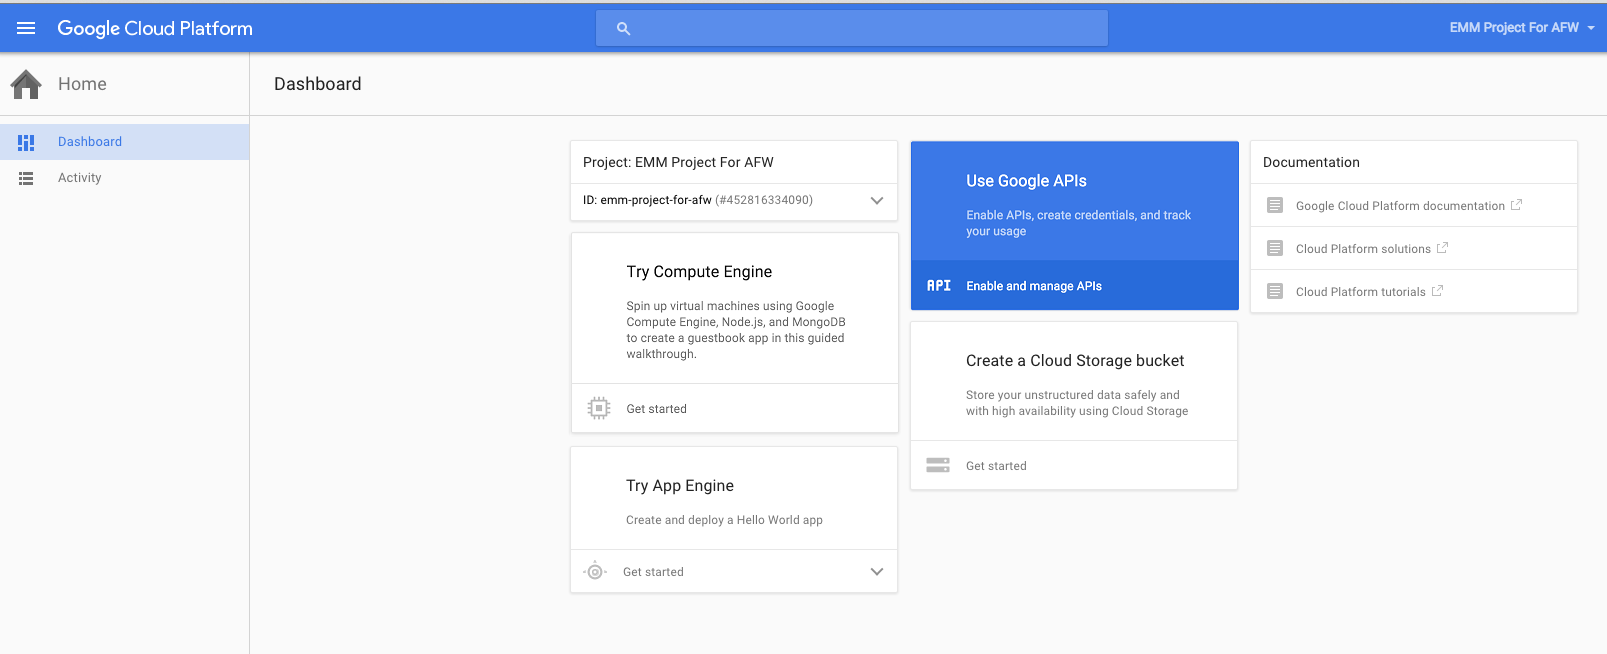 The Use Google APIs option